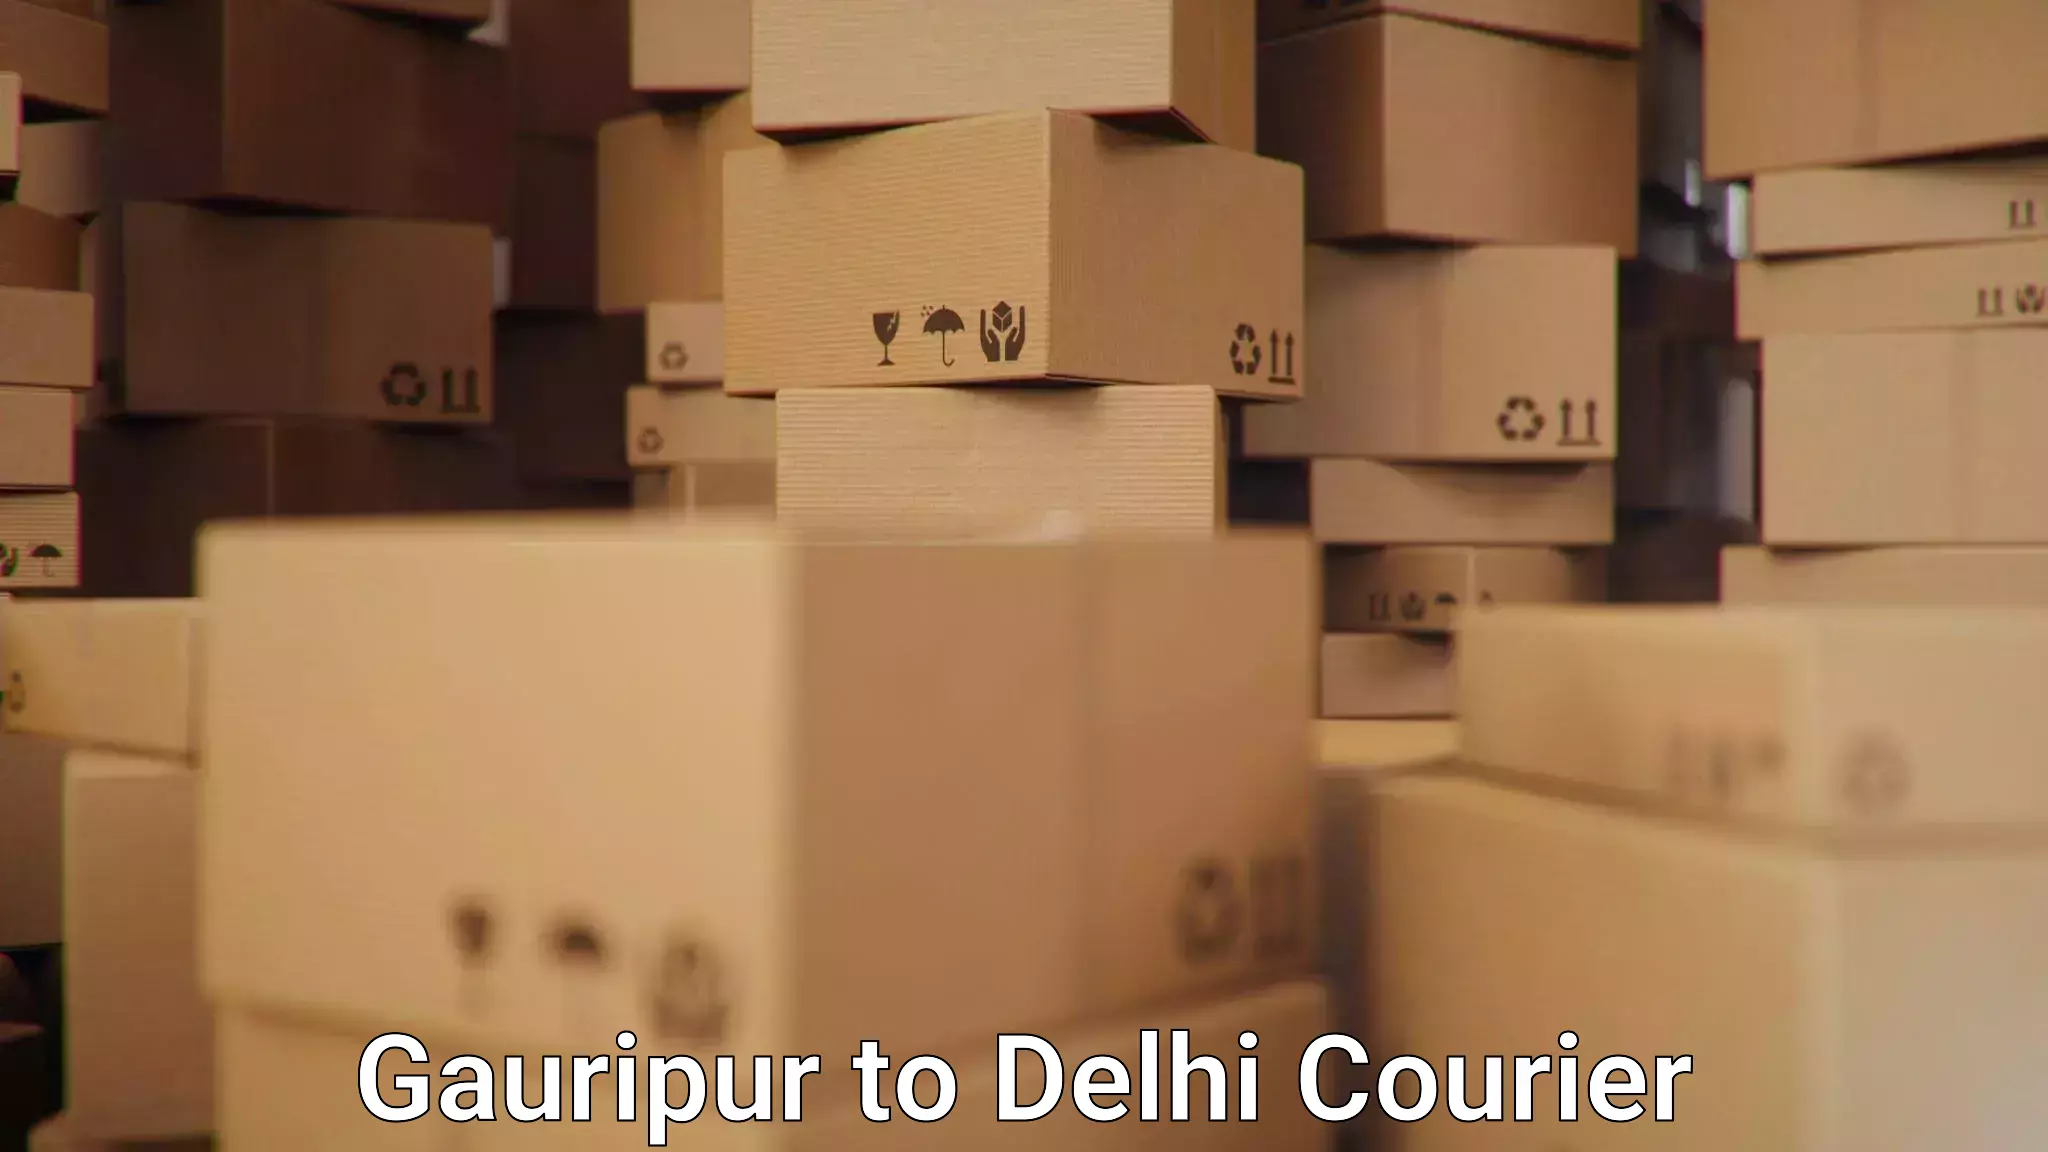 Advanced shipping technology Gauripur to Delhi